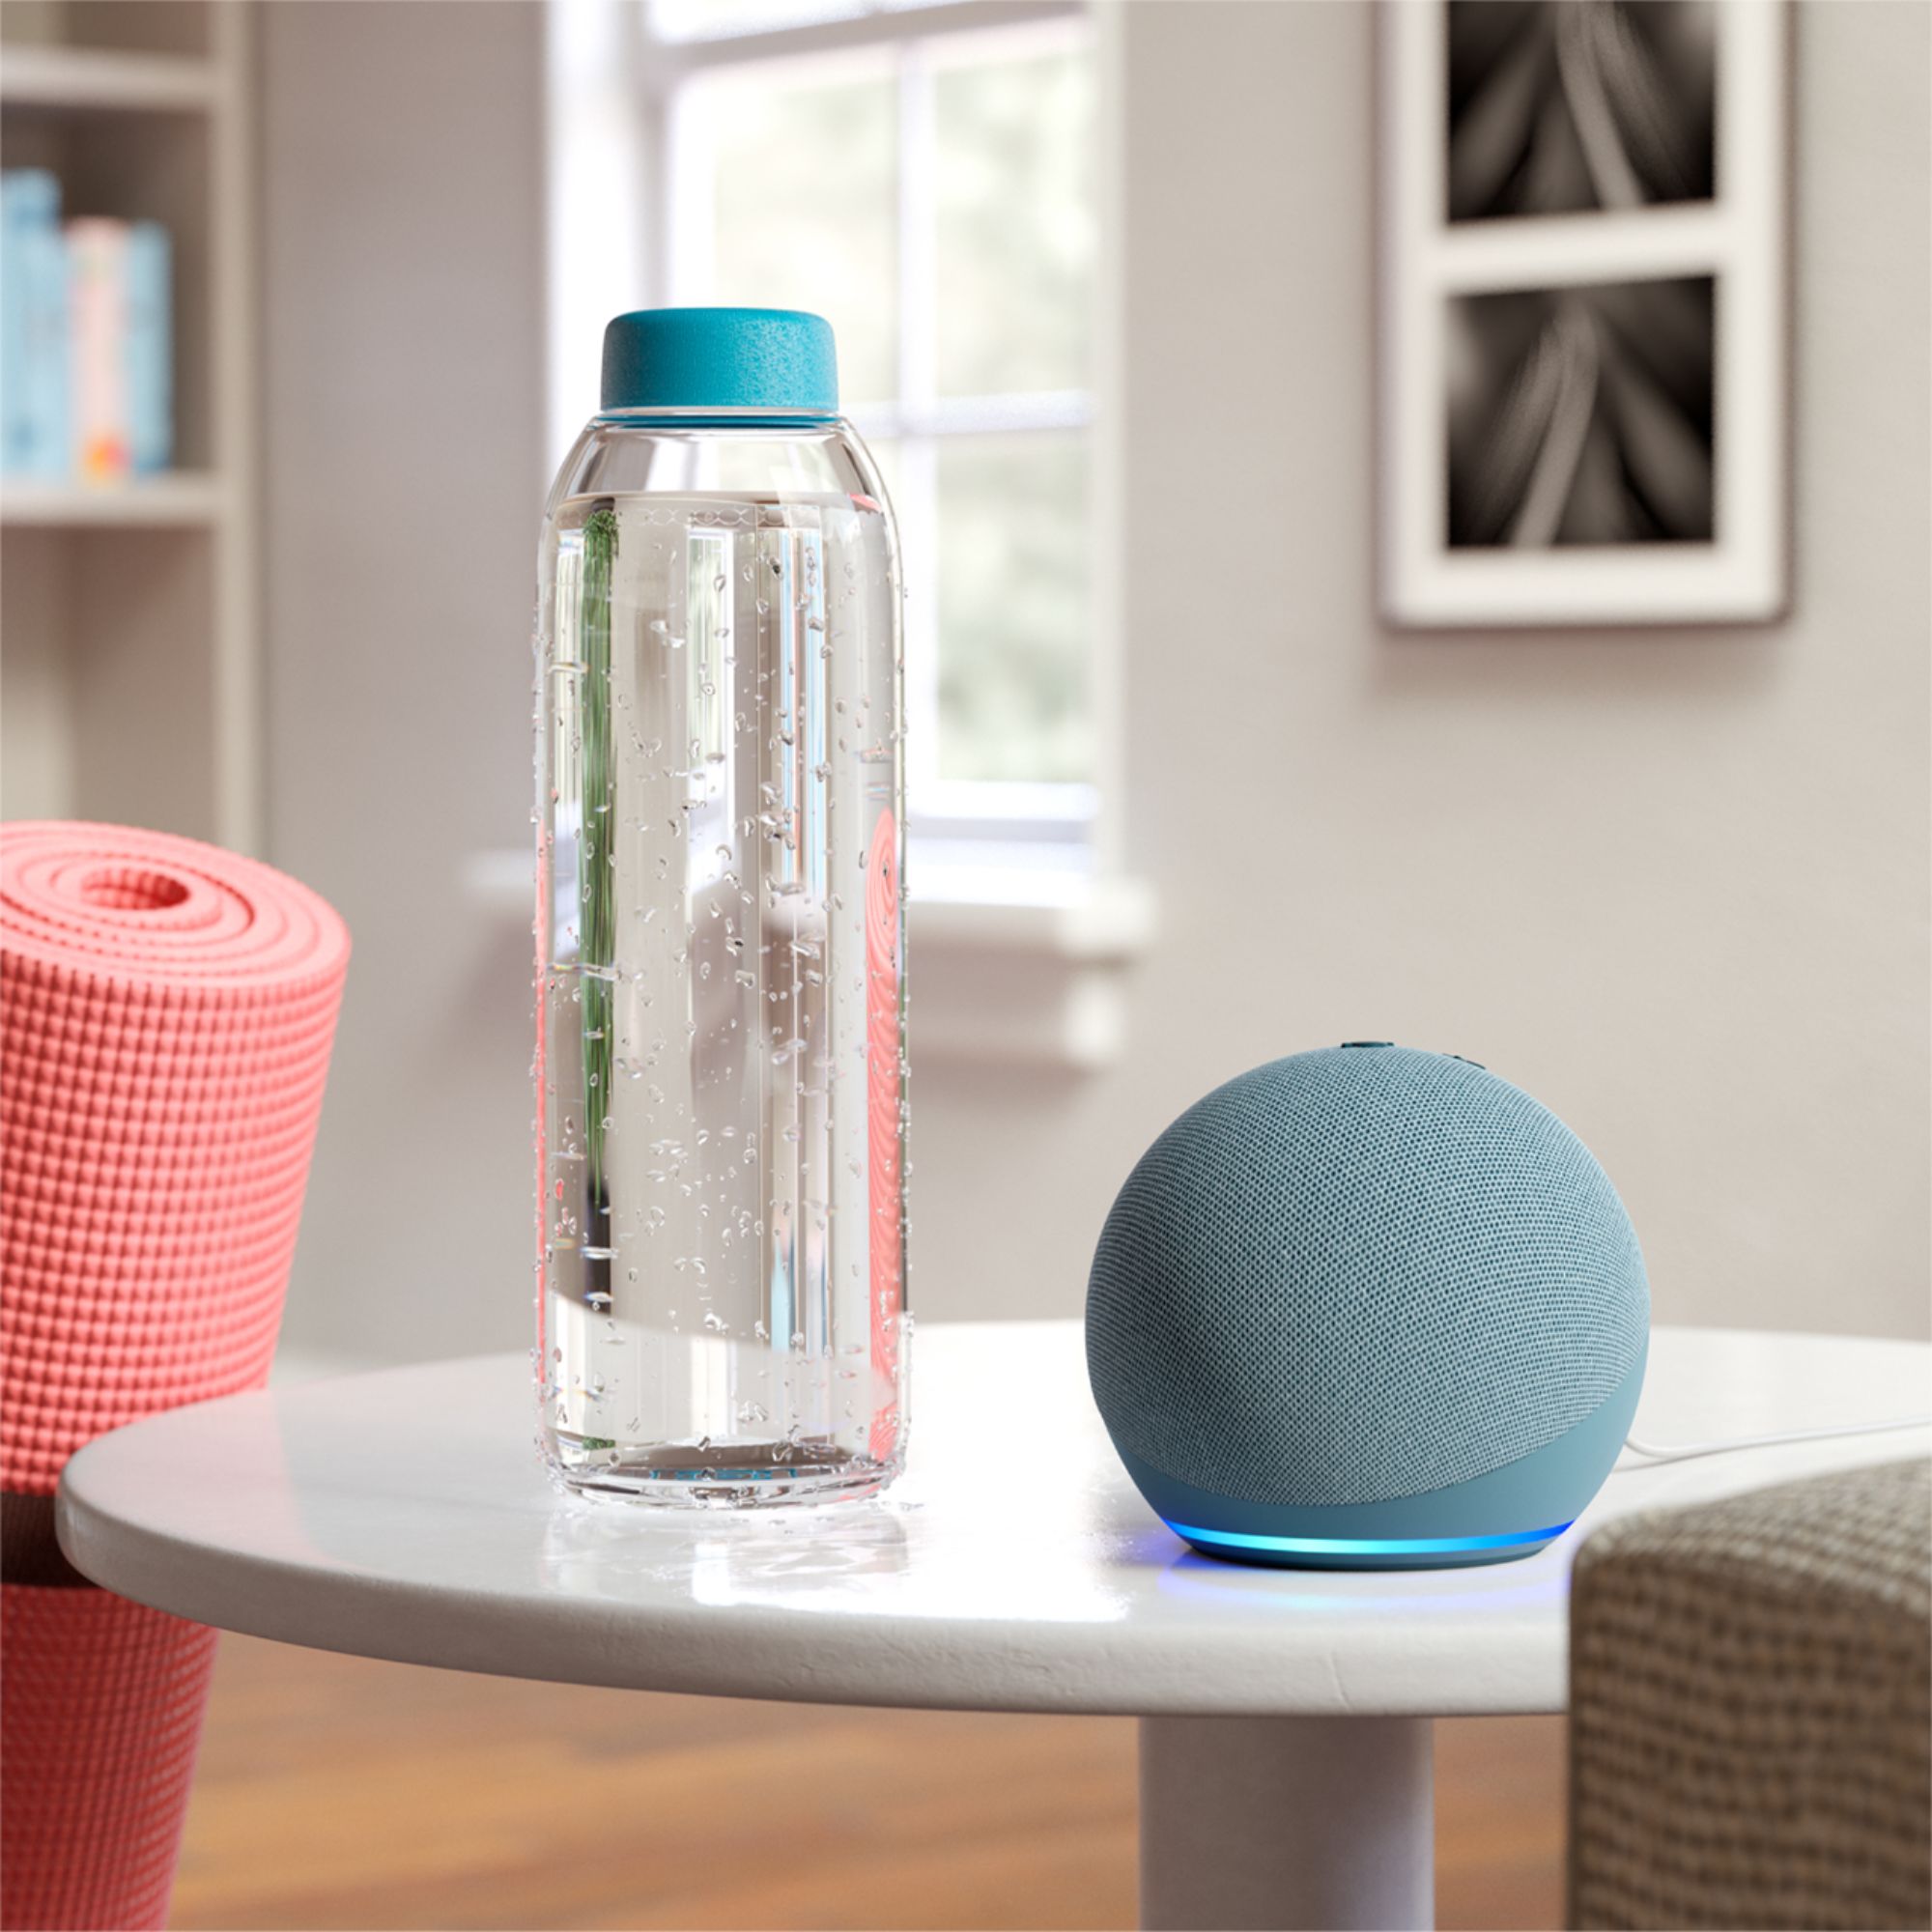 Echo (4th Gen) - Smart Home Hub with Alexa - Twilight Blue